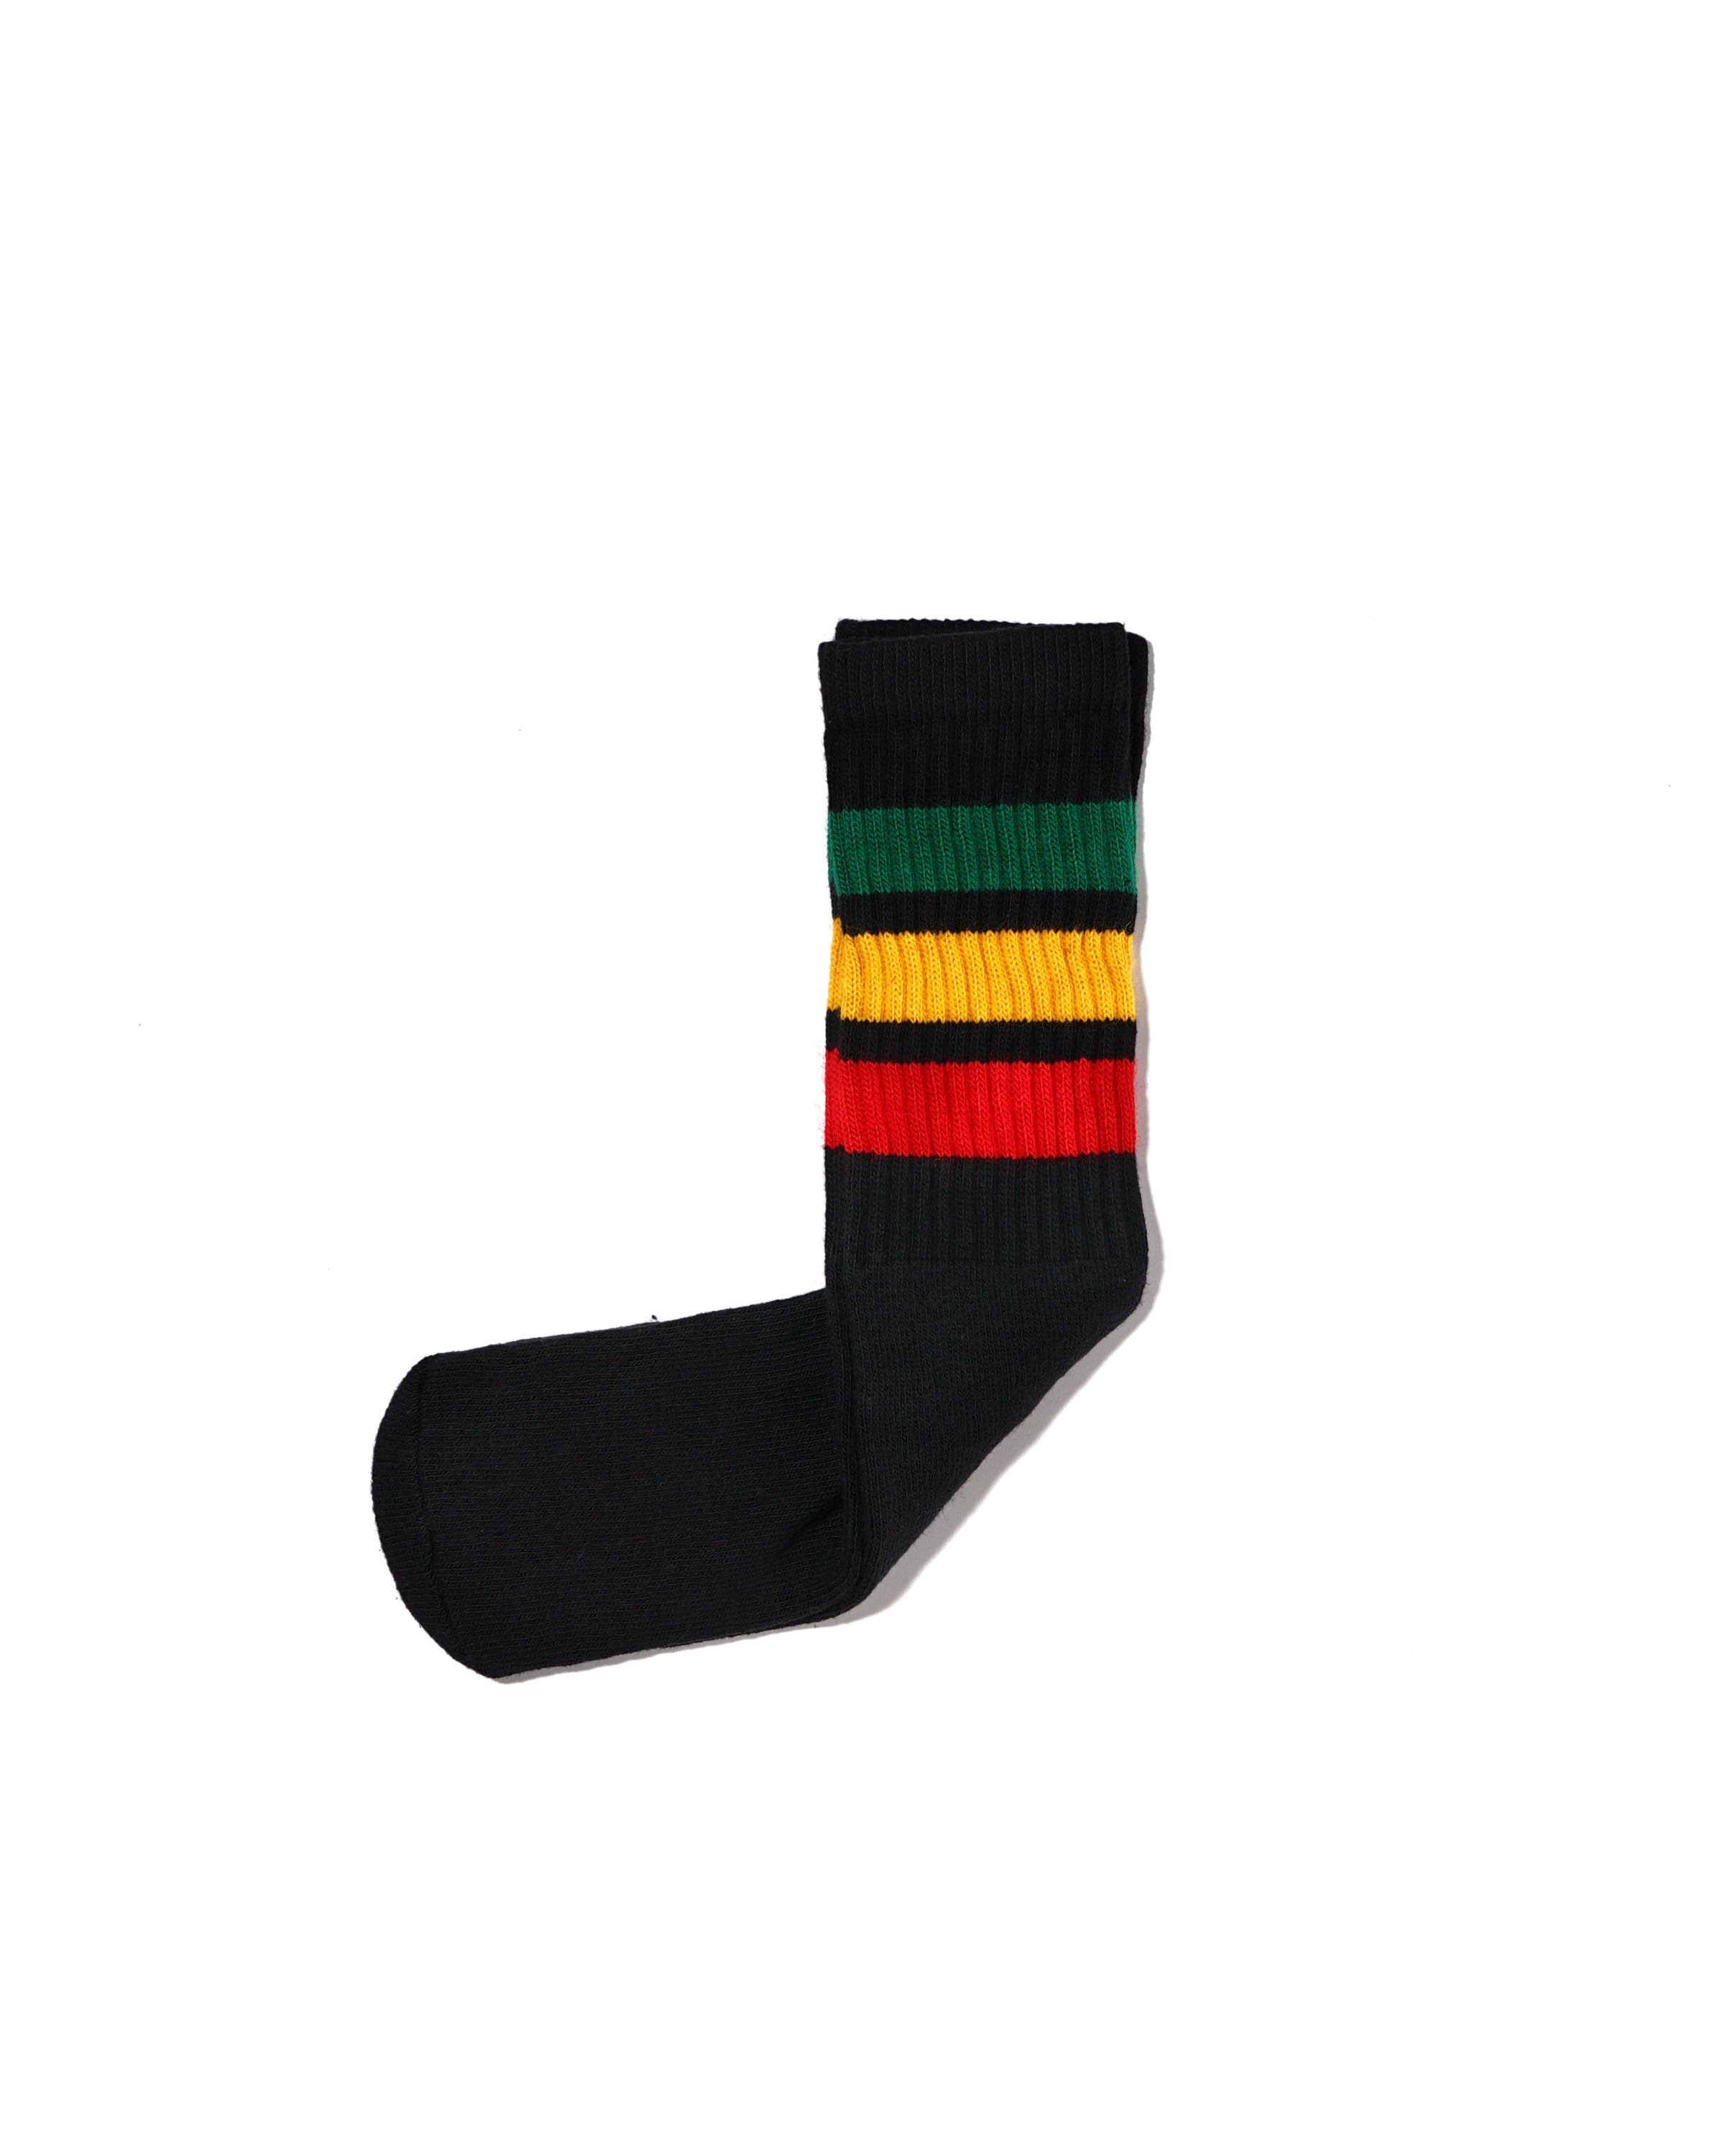 14 Inch Kids Socks - Black w/Green/Gold/Red Stripe